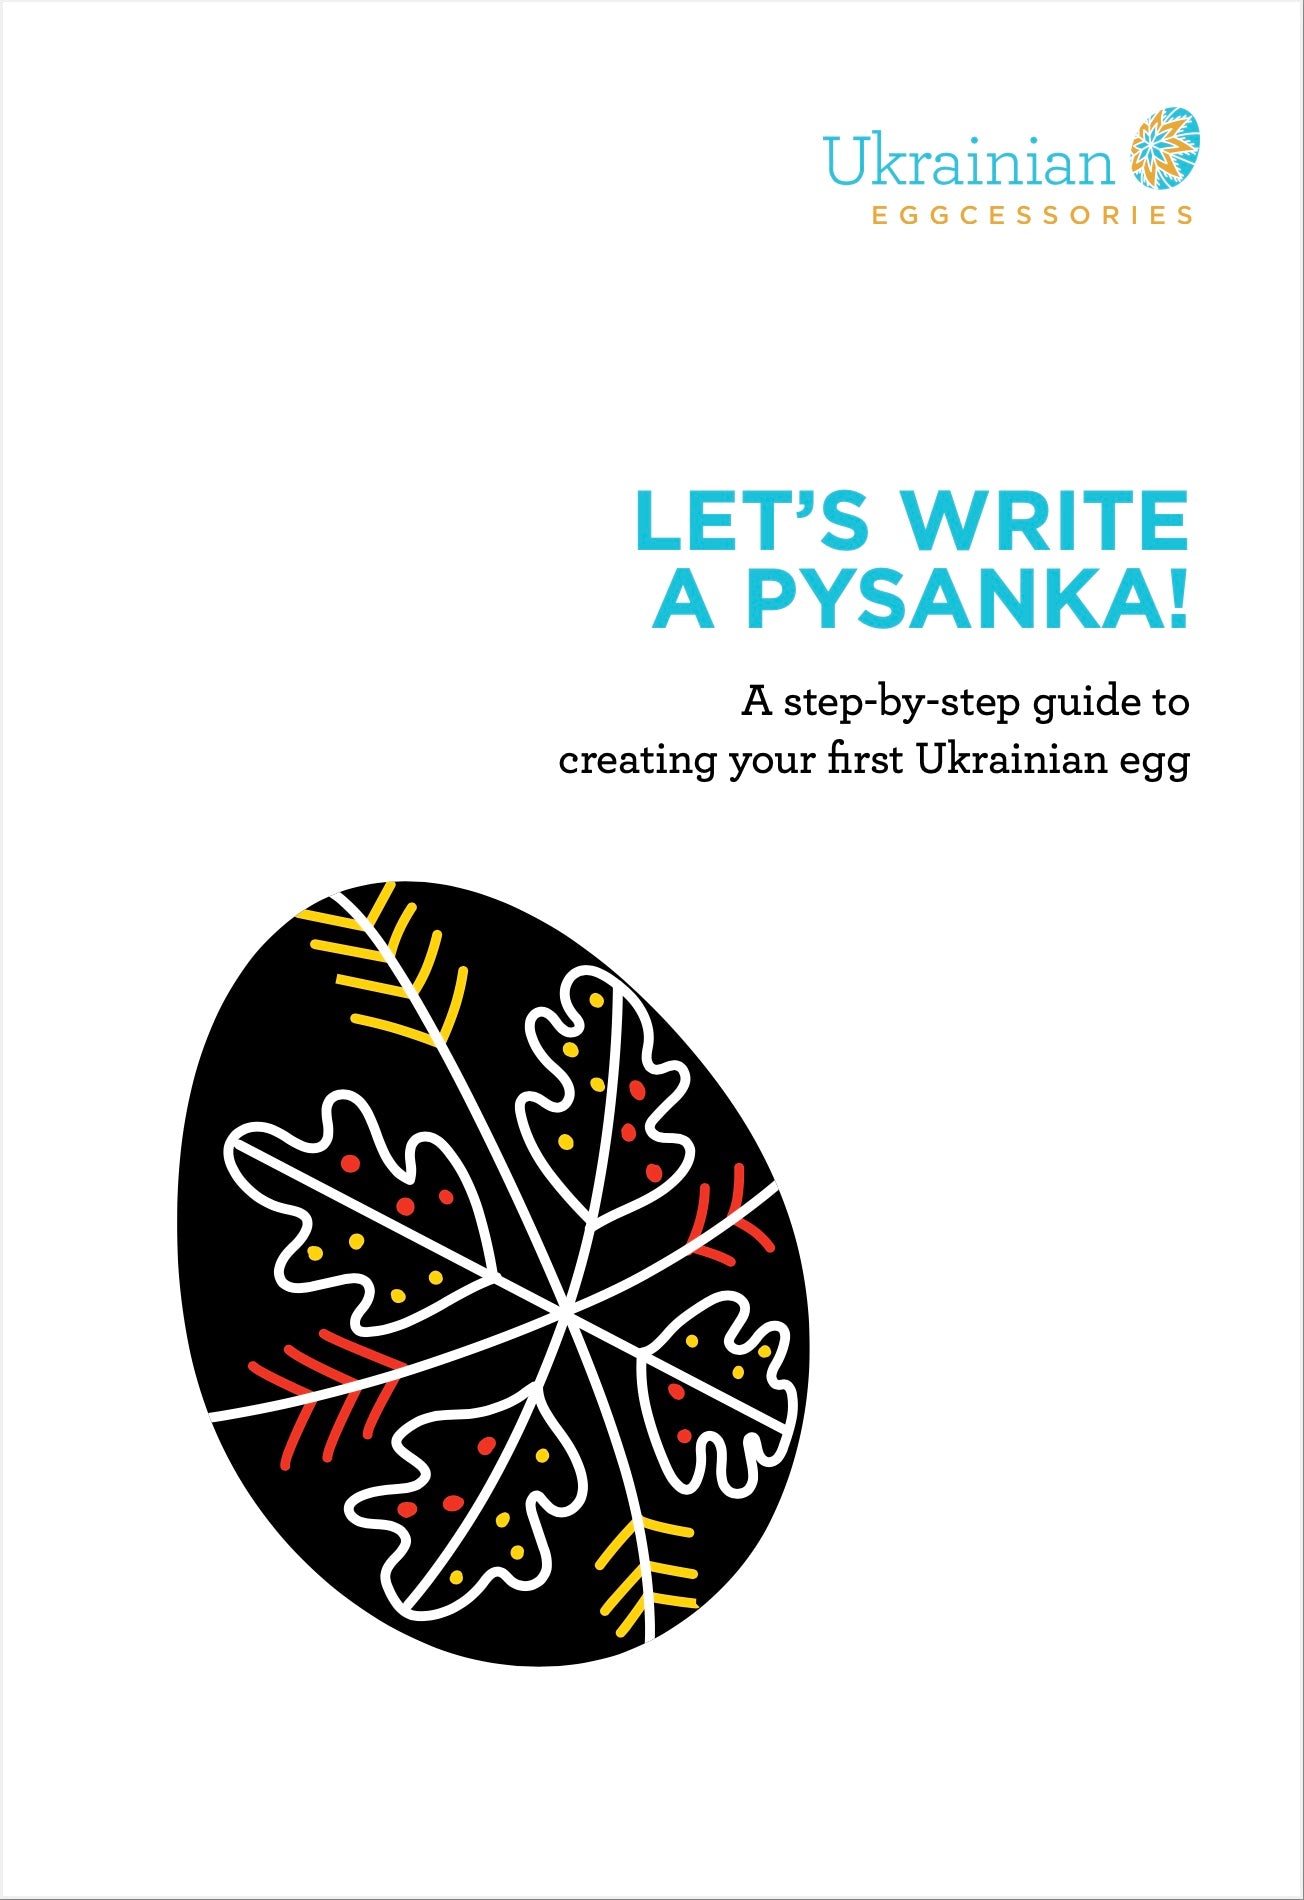 21. Community "Let's Write a Pysanka" Beginner Workshop - Irene Johnston - Saturday July 20th - 1:00 to 3:00pm